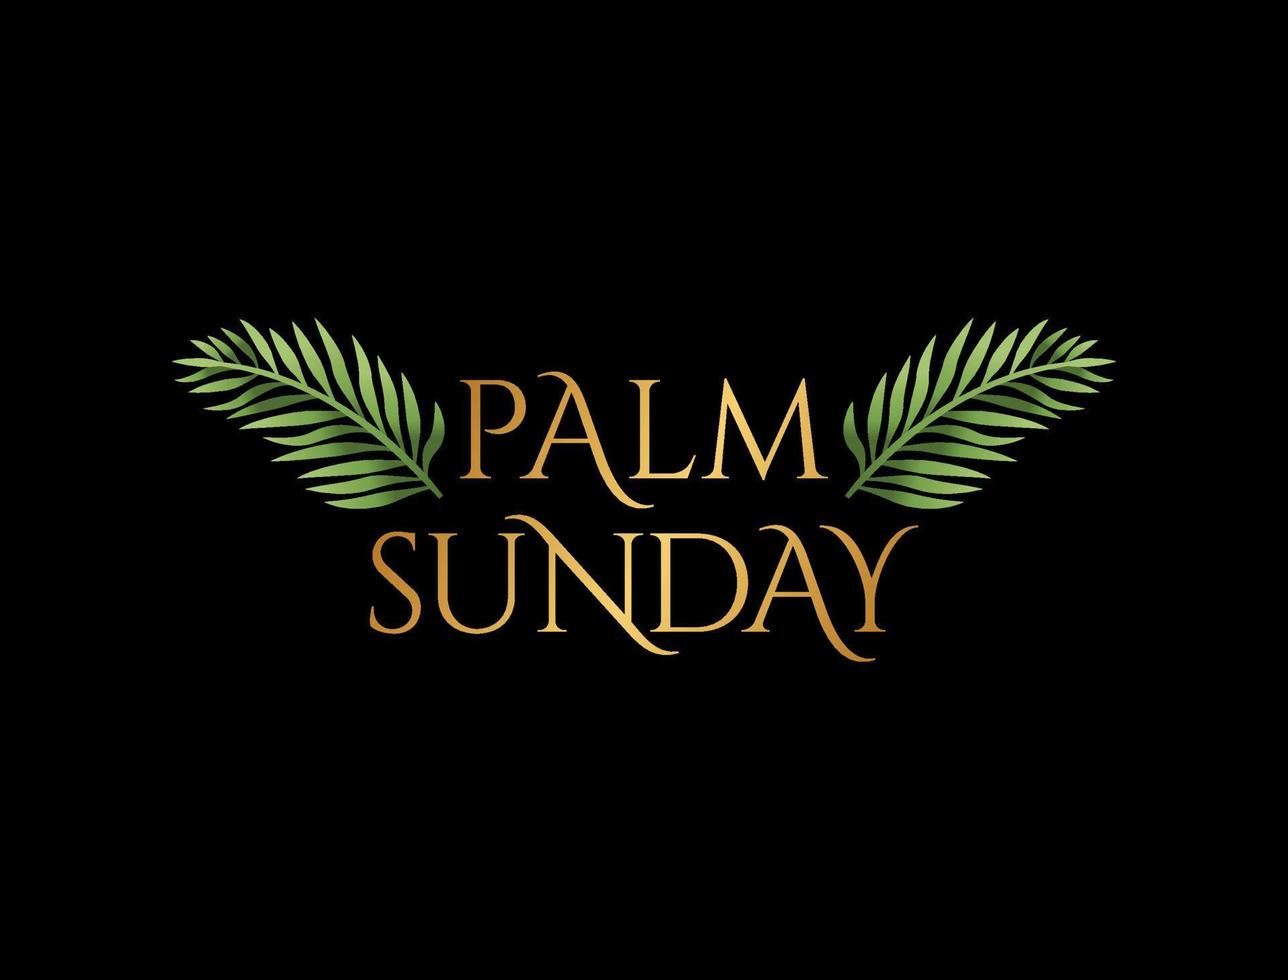 Palm Sunday Christian Holiday Theme Illustration vector